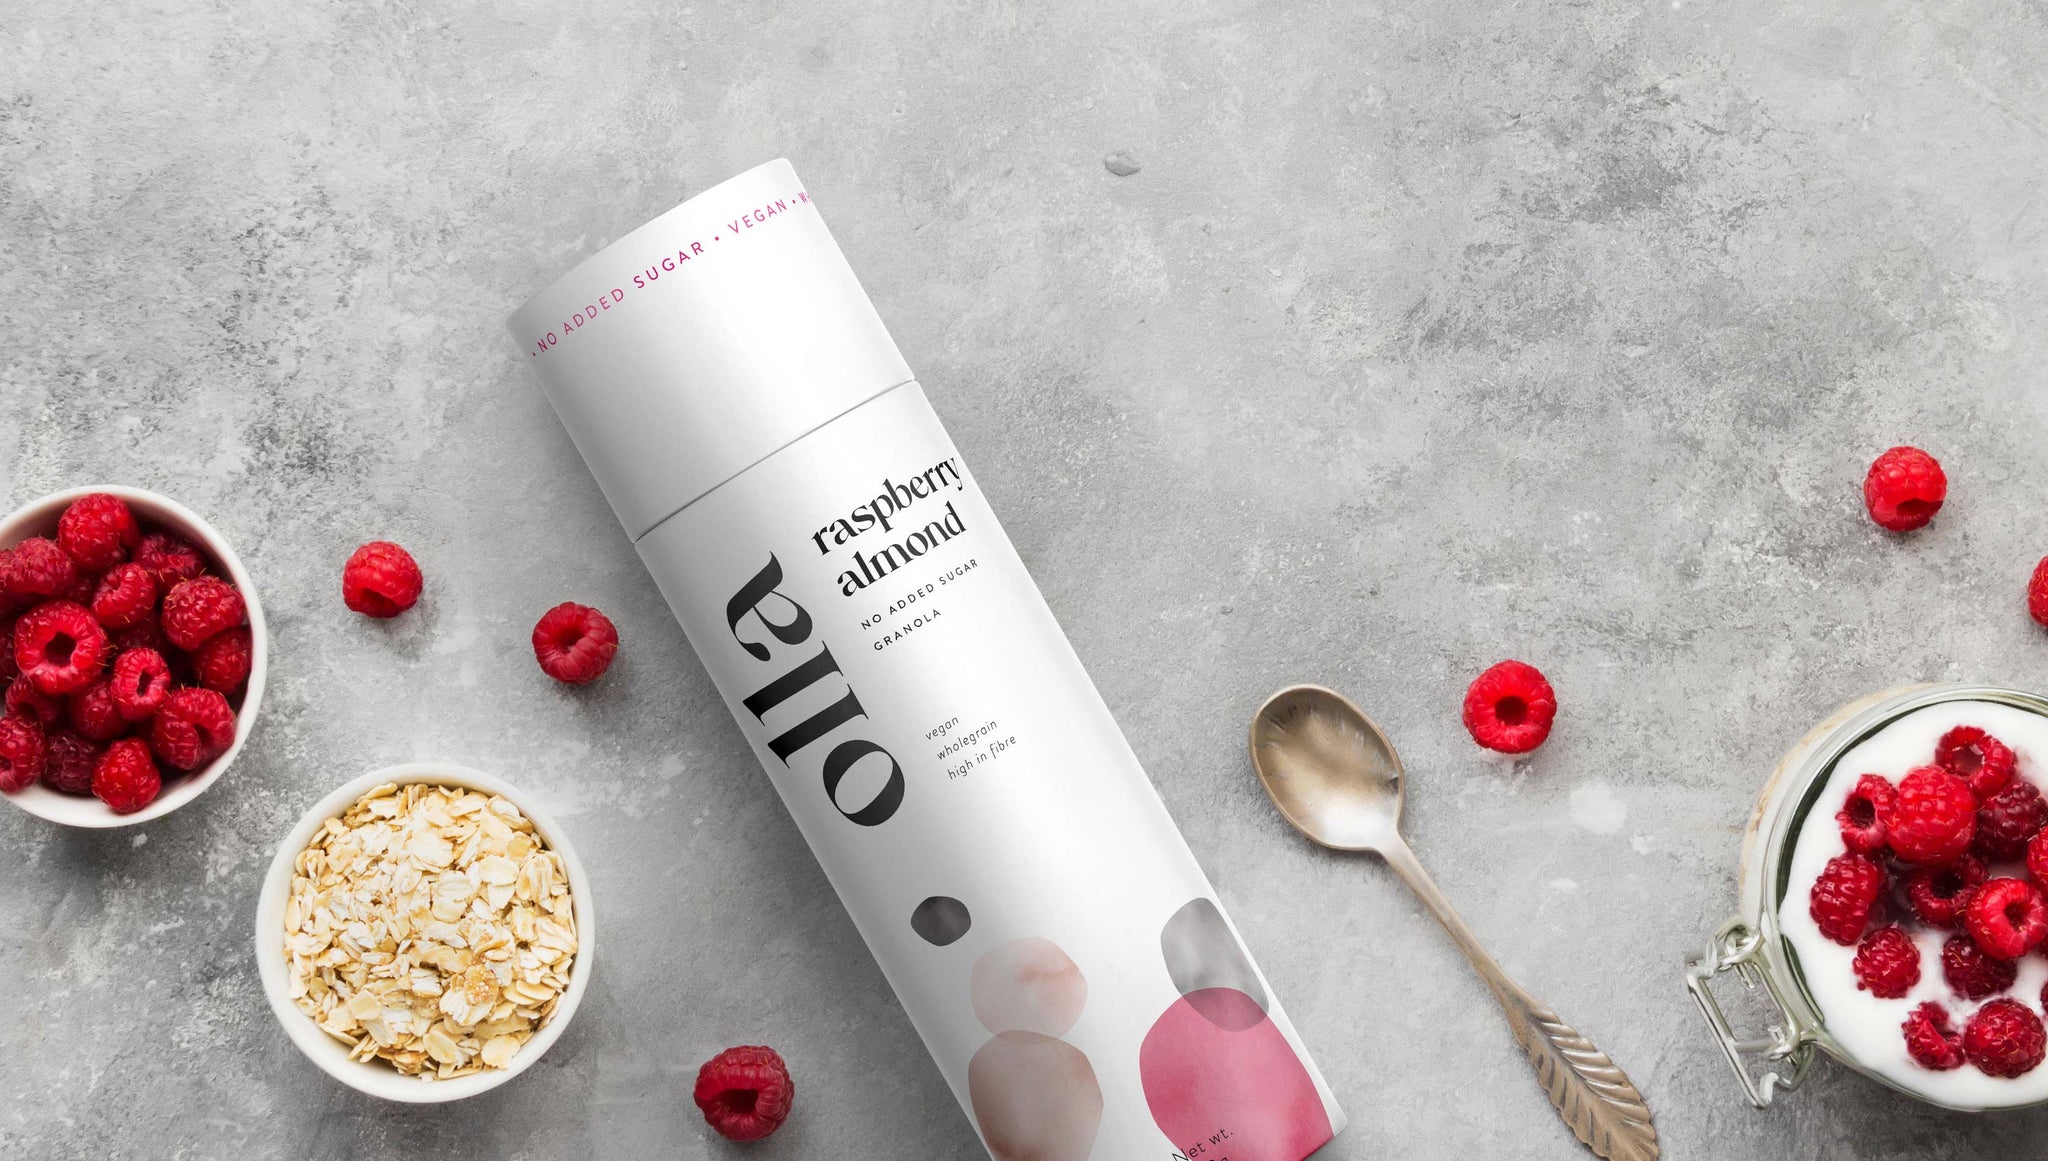 Karolina Król Studio Olla Granola minimalist brand identity and sustainable packaging design for no-sugar-added raspberry almond granola